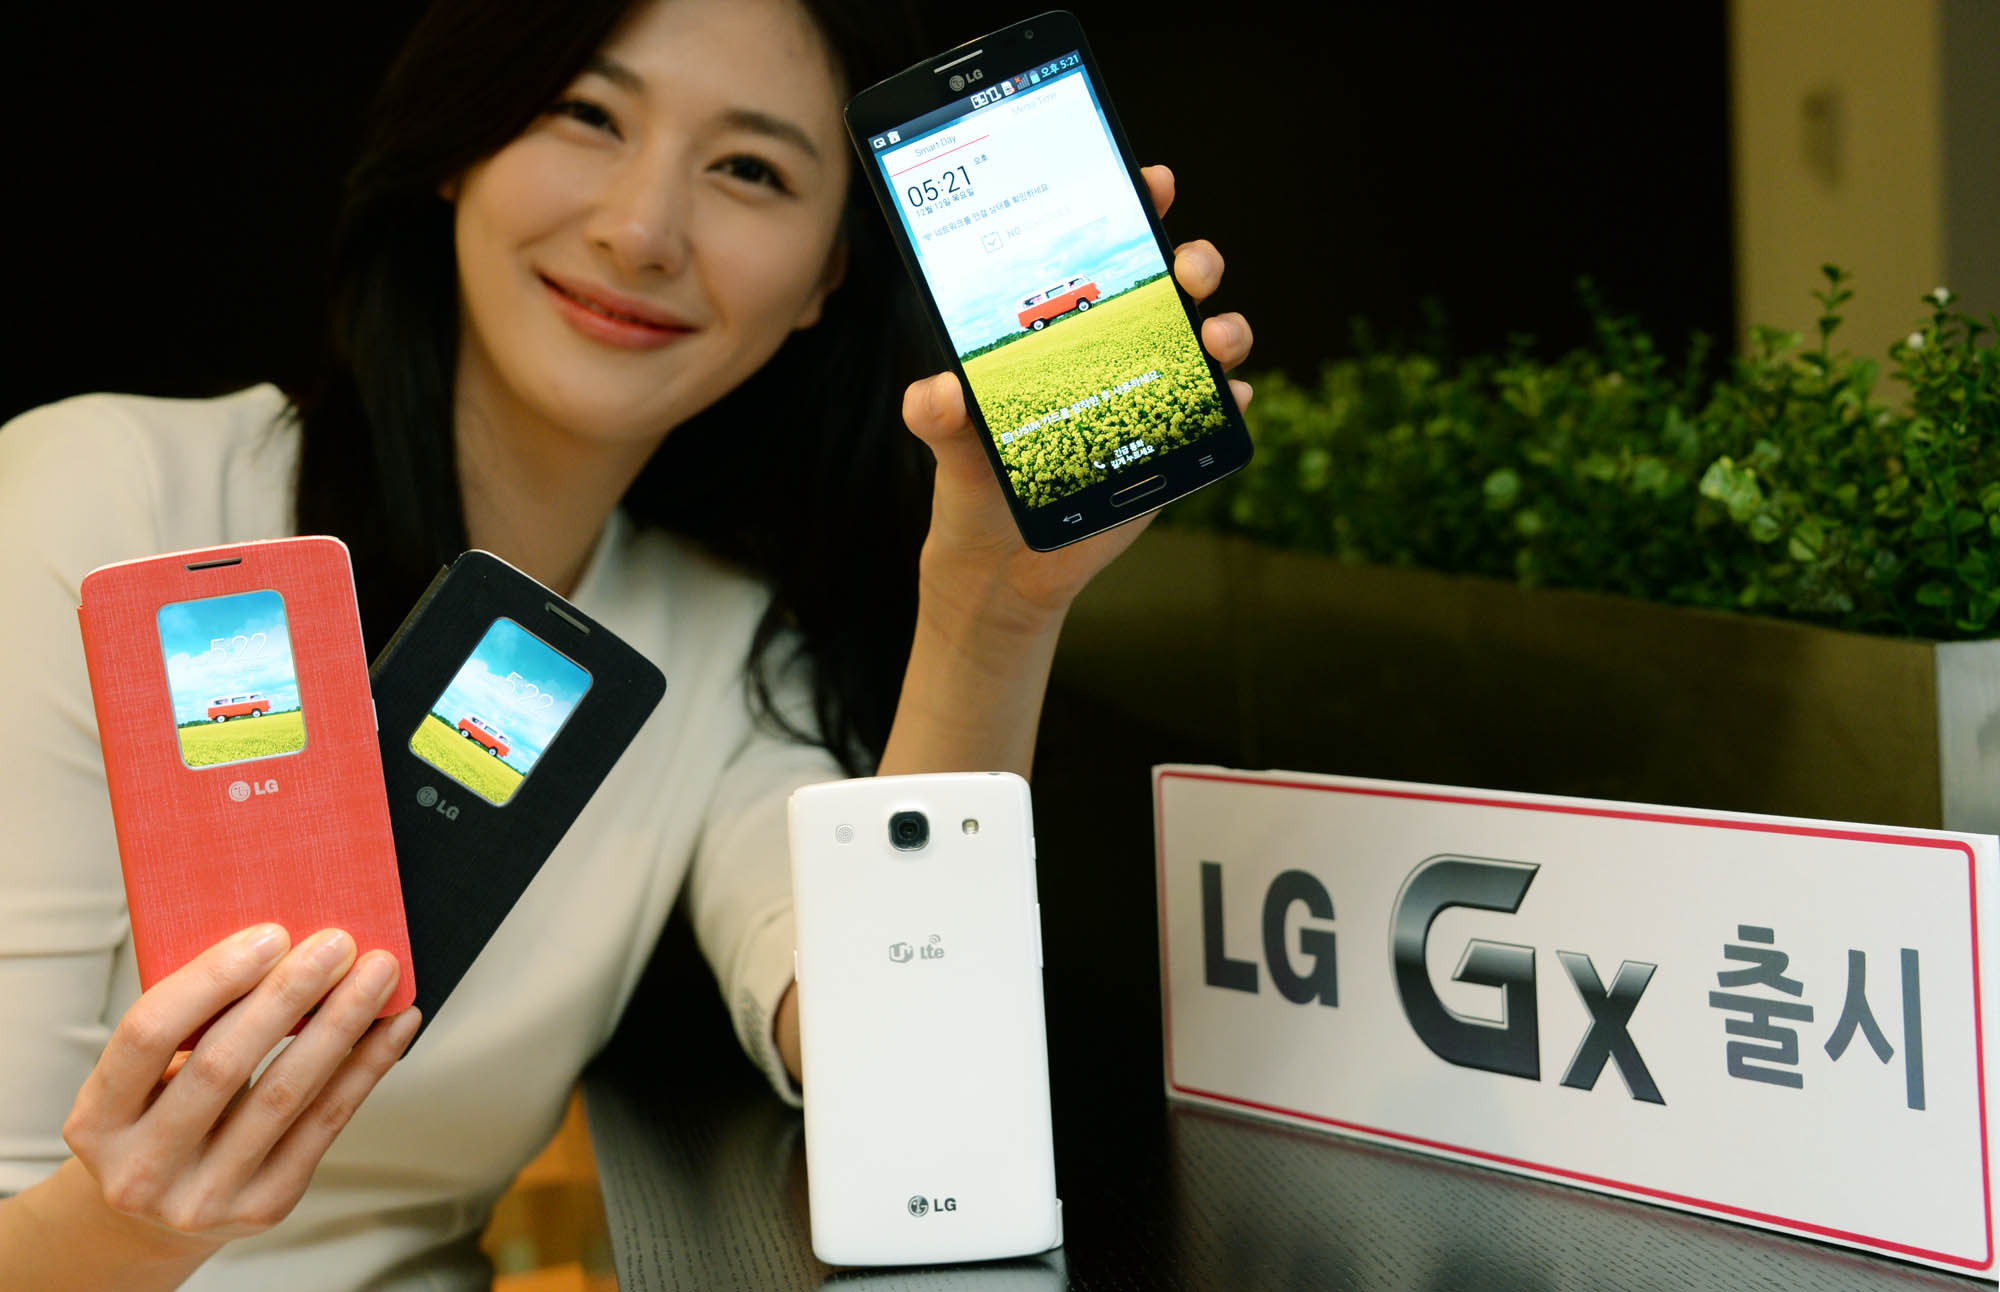 lg-gx-smartphone-tablet-hybrid-announced